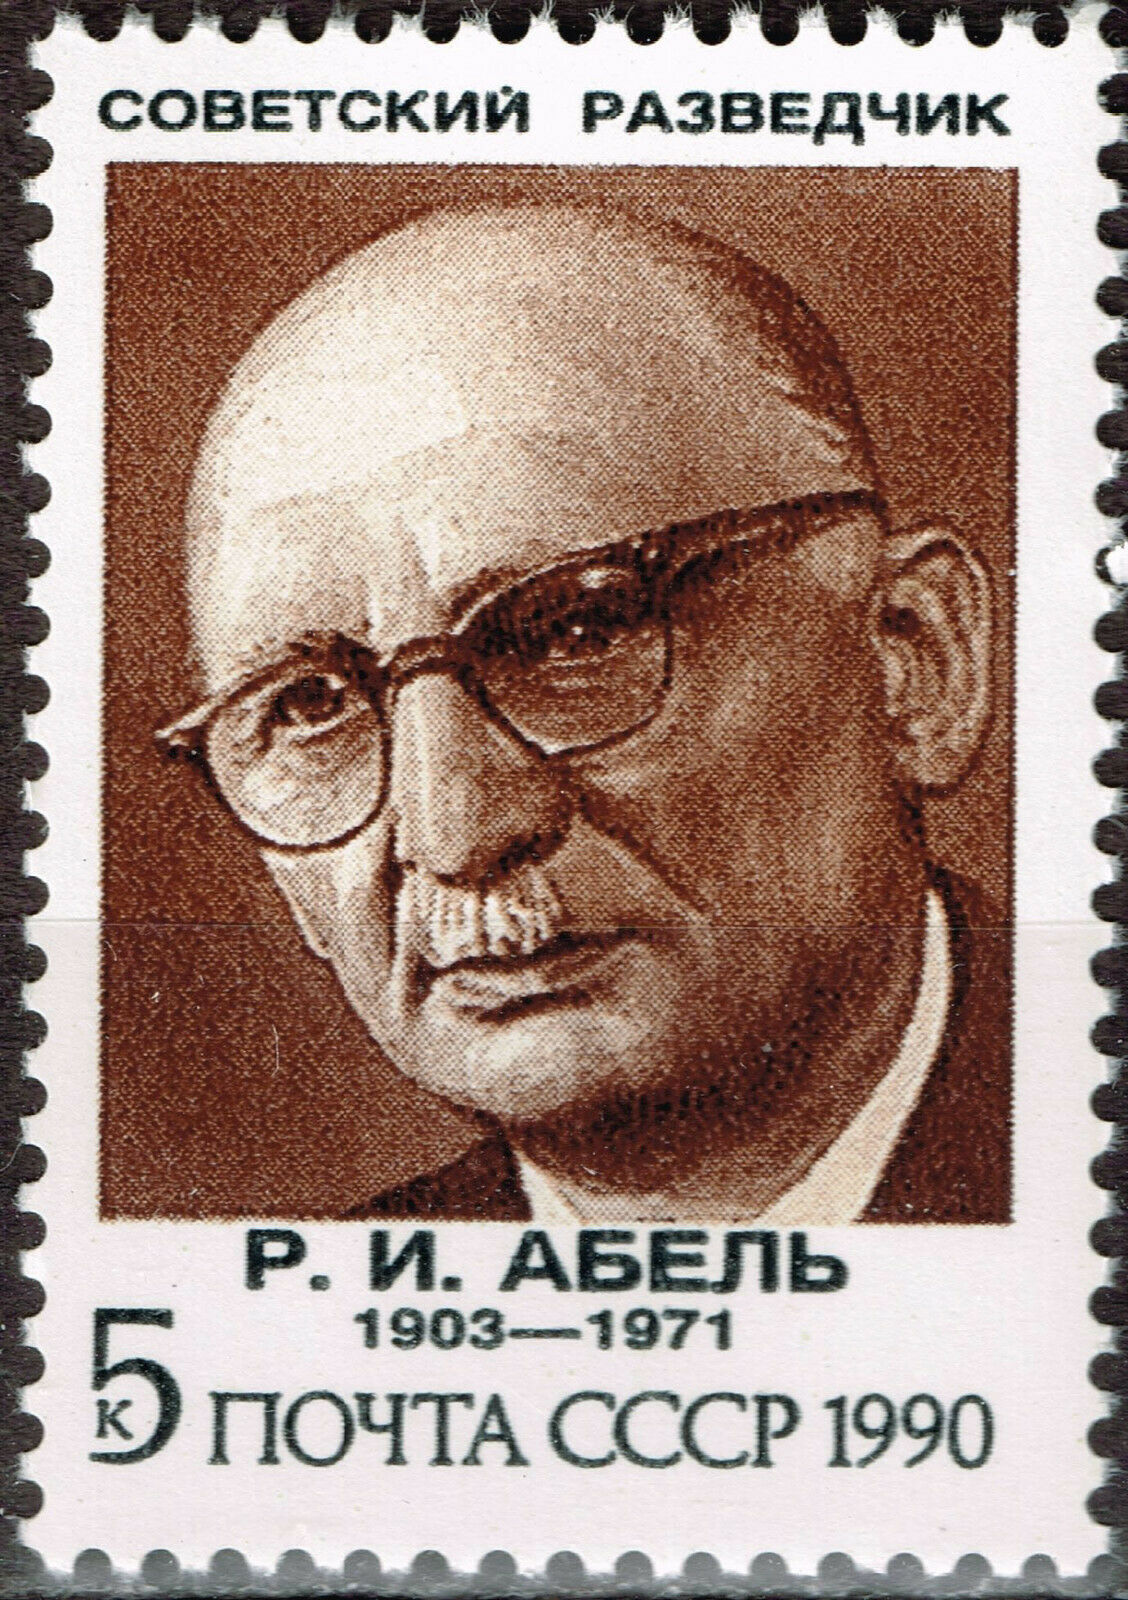 Soviet Spy Stamp Collection | Media